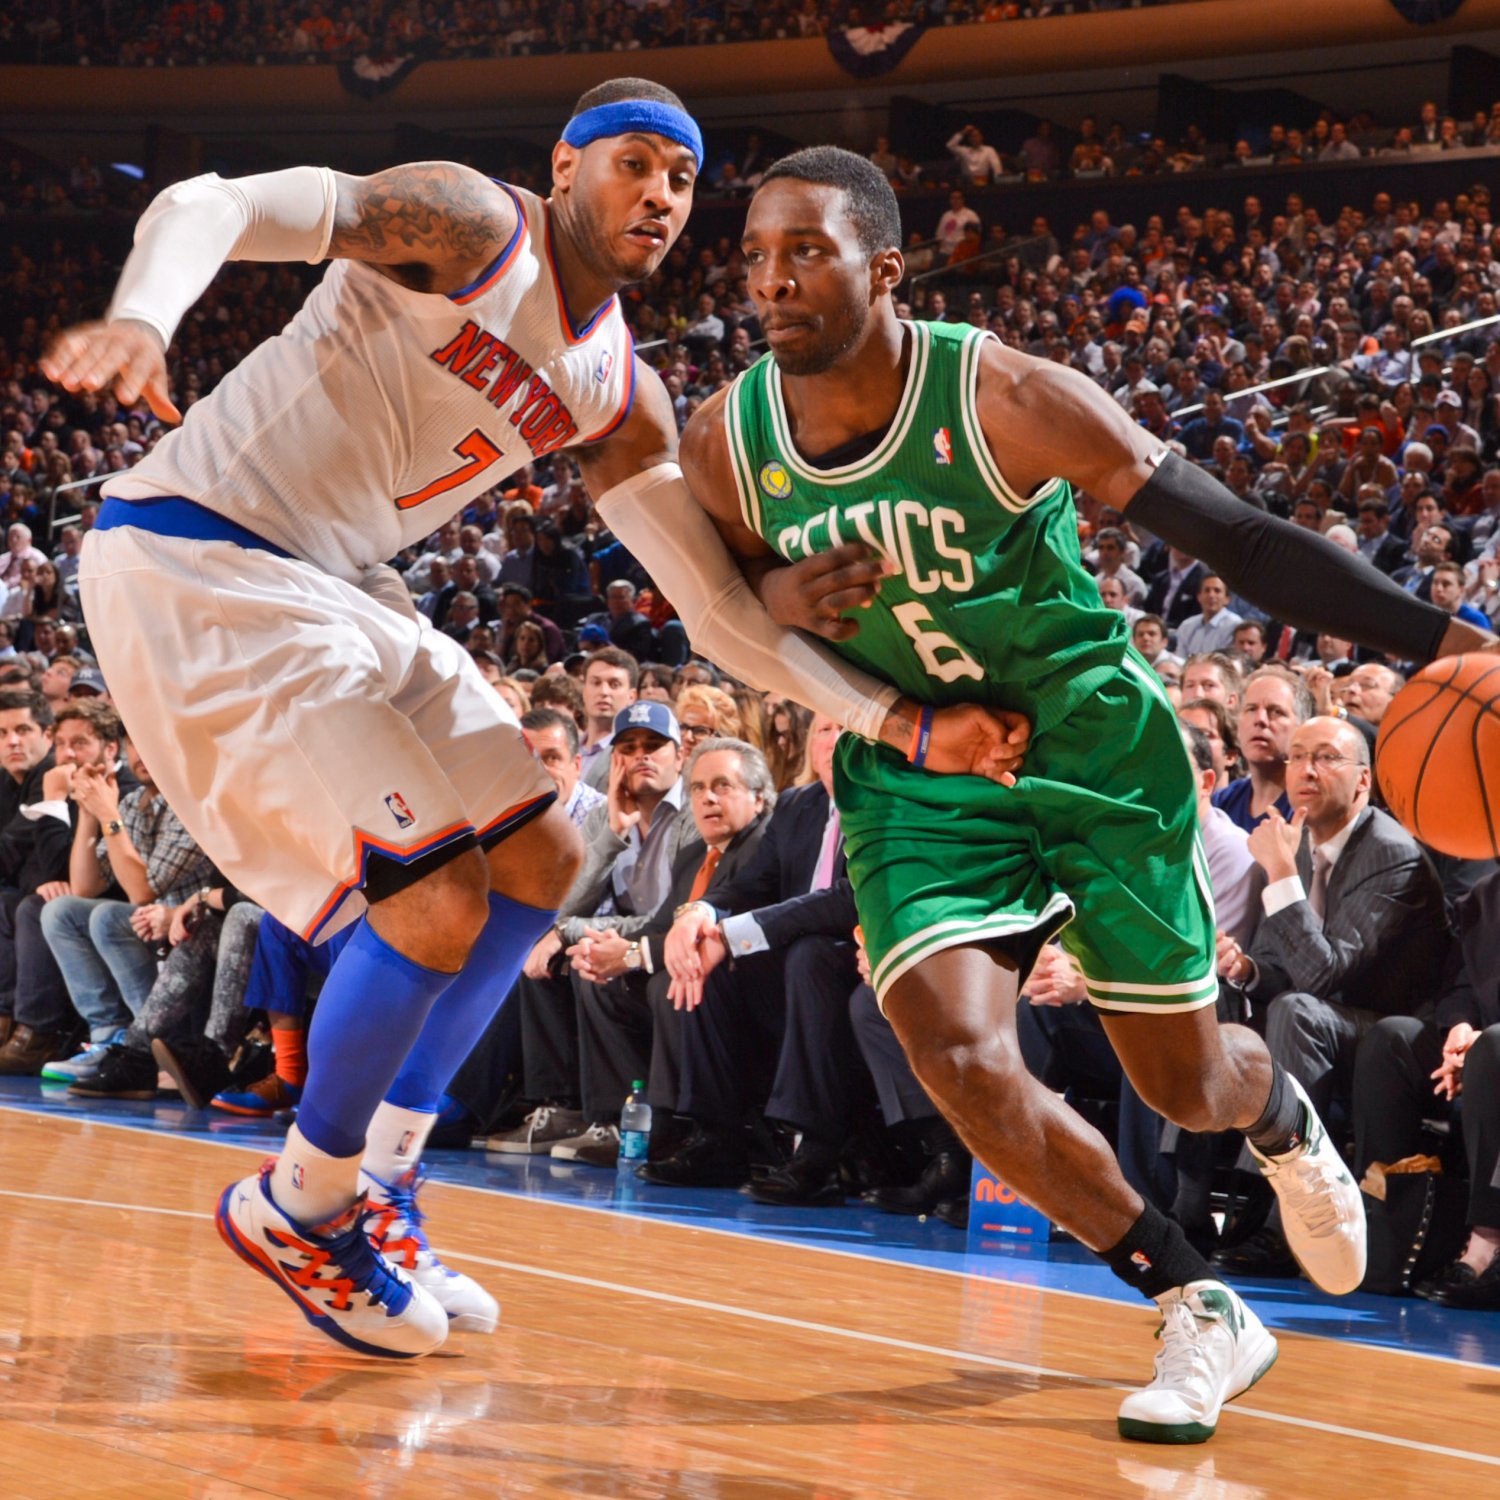 Celtics vs. Knicks Game 5 Live Score, Highlights and Analysis